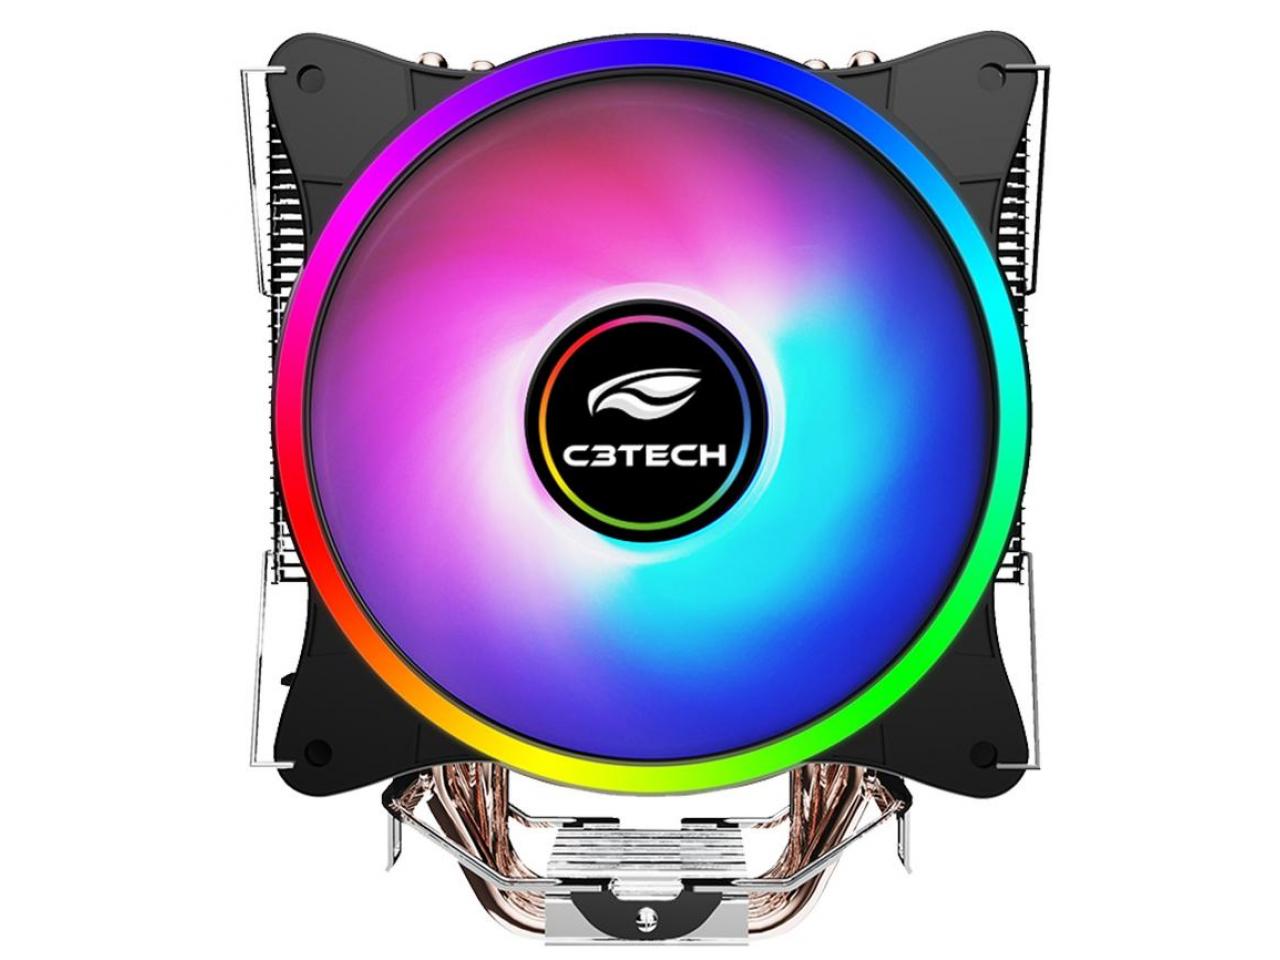 CPU Cooler C3Tech FC-L100M Multicores (Intel/AMD)